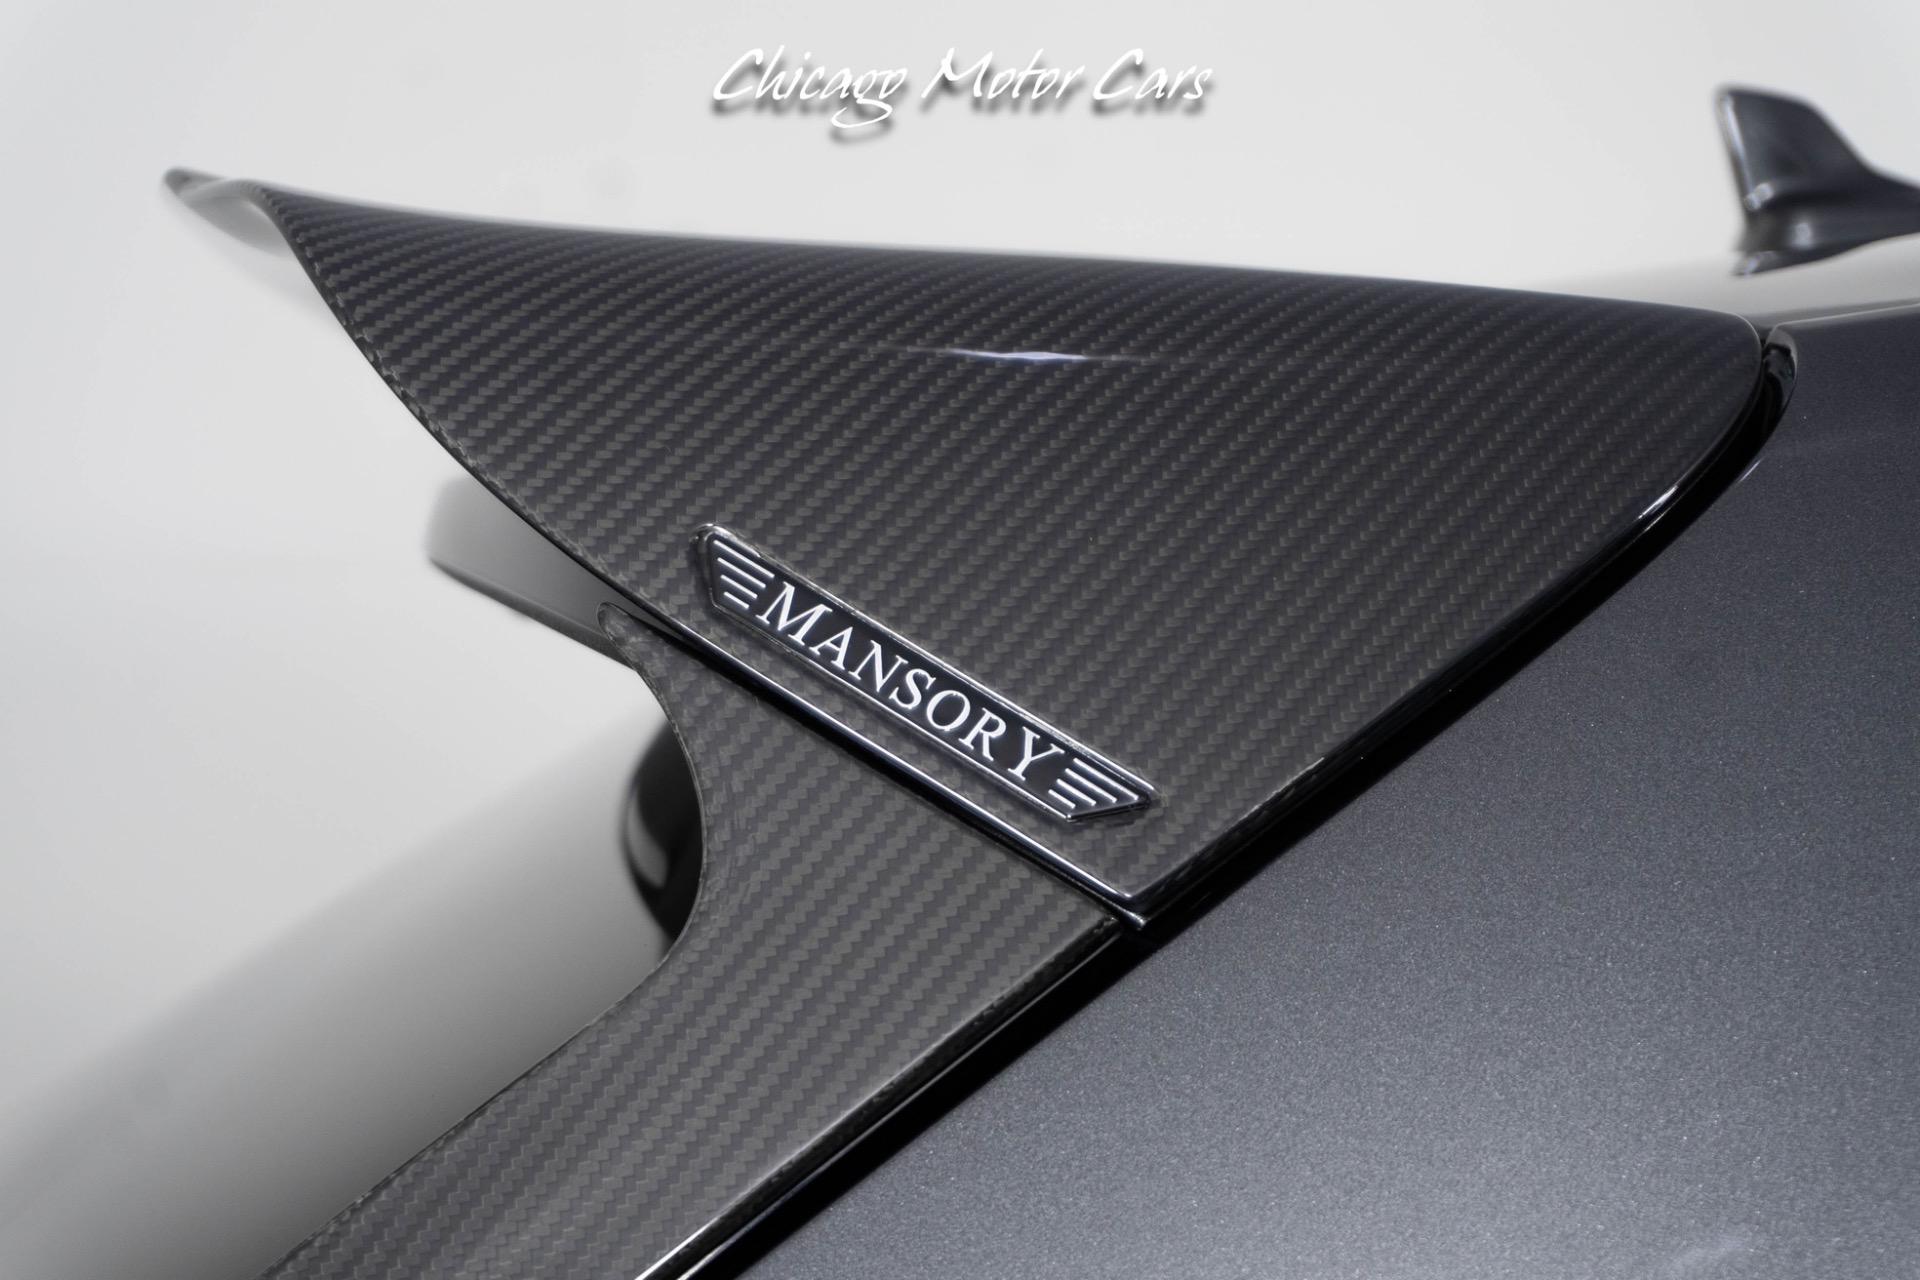 Used-2018-Bentley-Bentayga-MANSORY-EDITION-TONS-OF-CARBON-FIBER-HIGH-PERFORMANCE-LUXURY-SUV